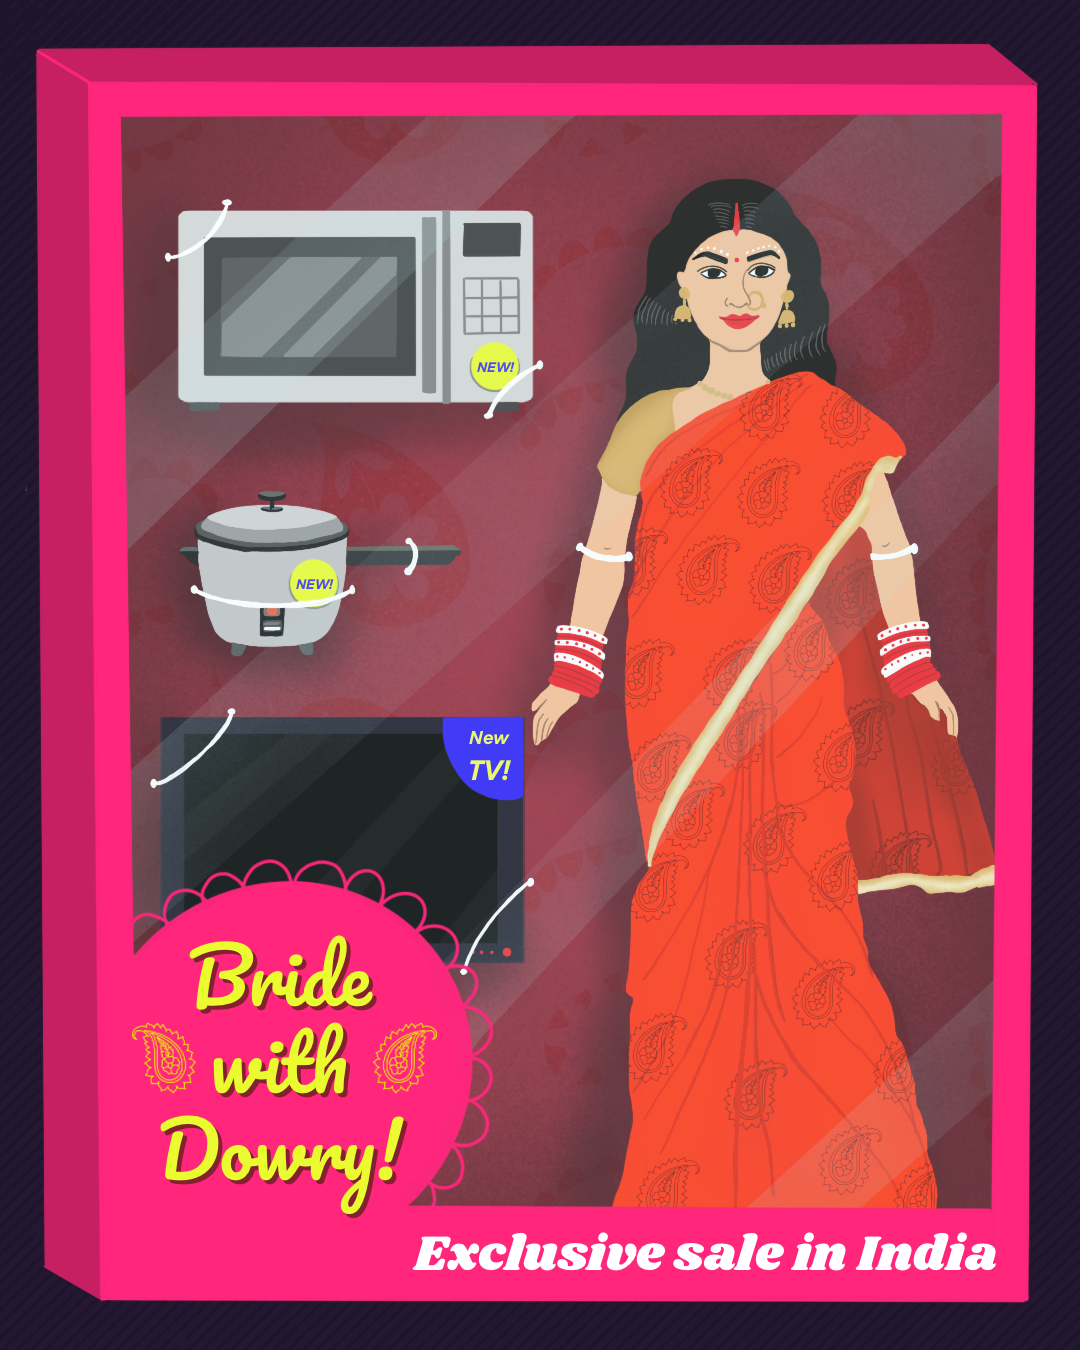 Dowry Bride by Smishdesigns